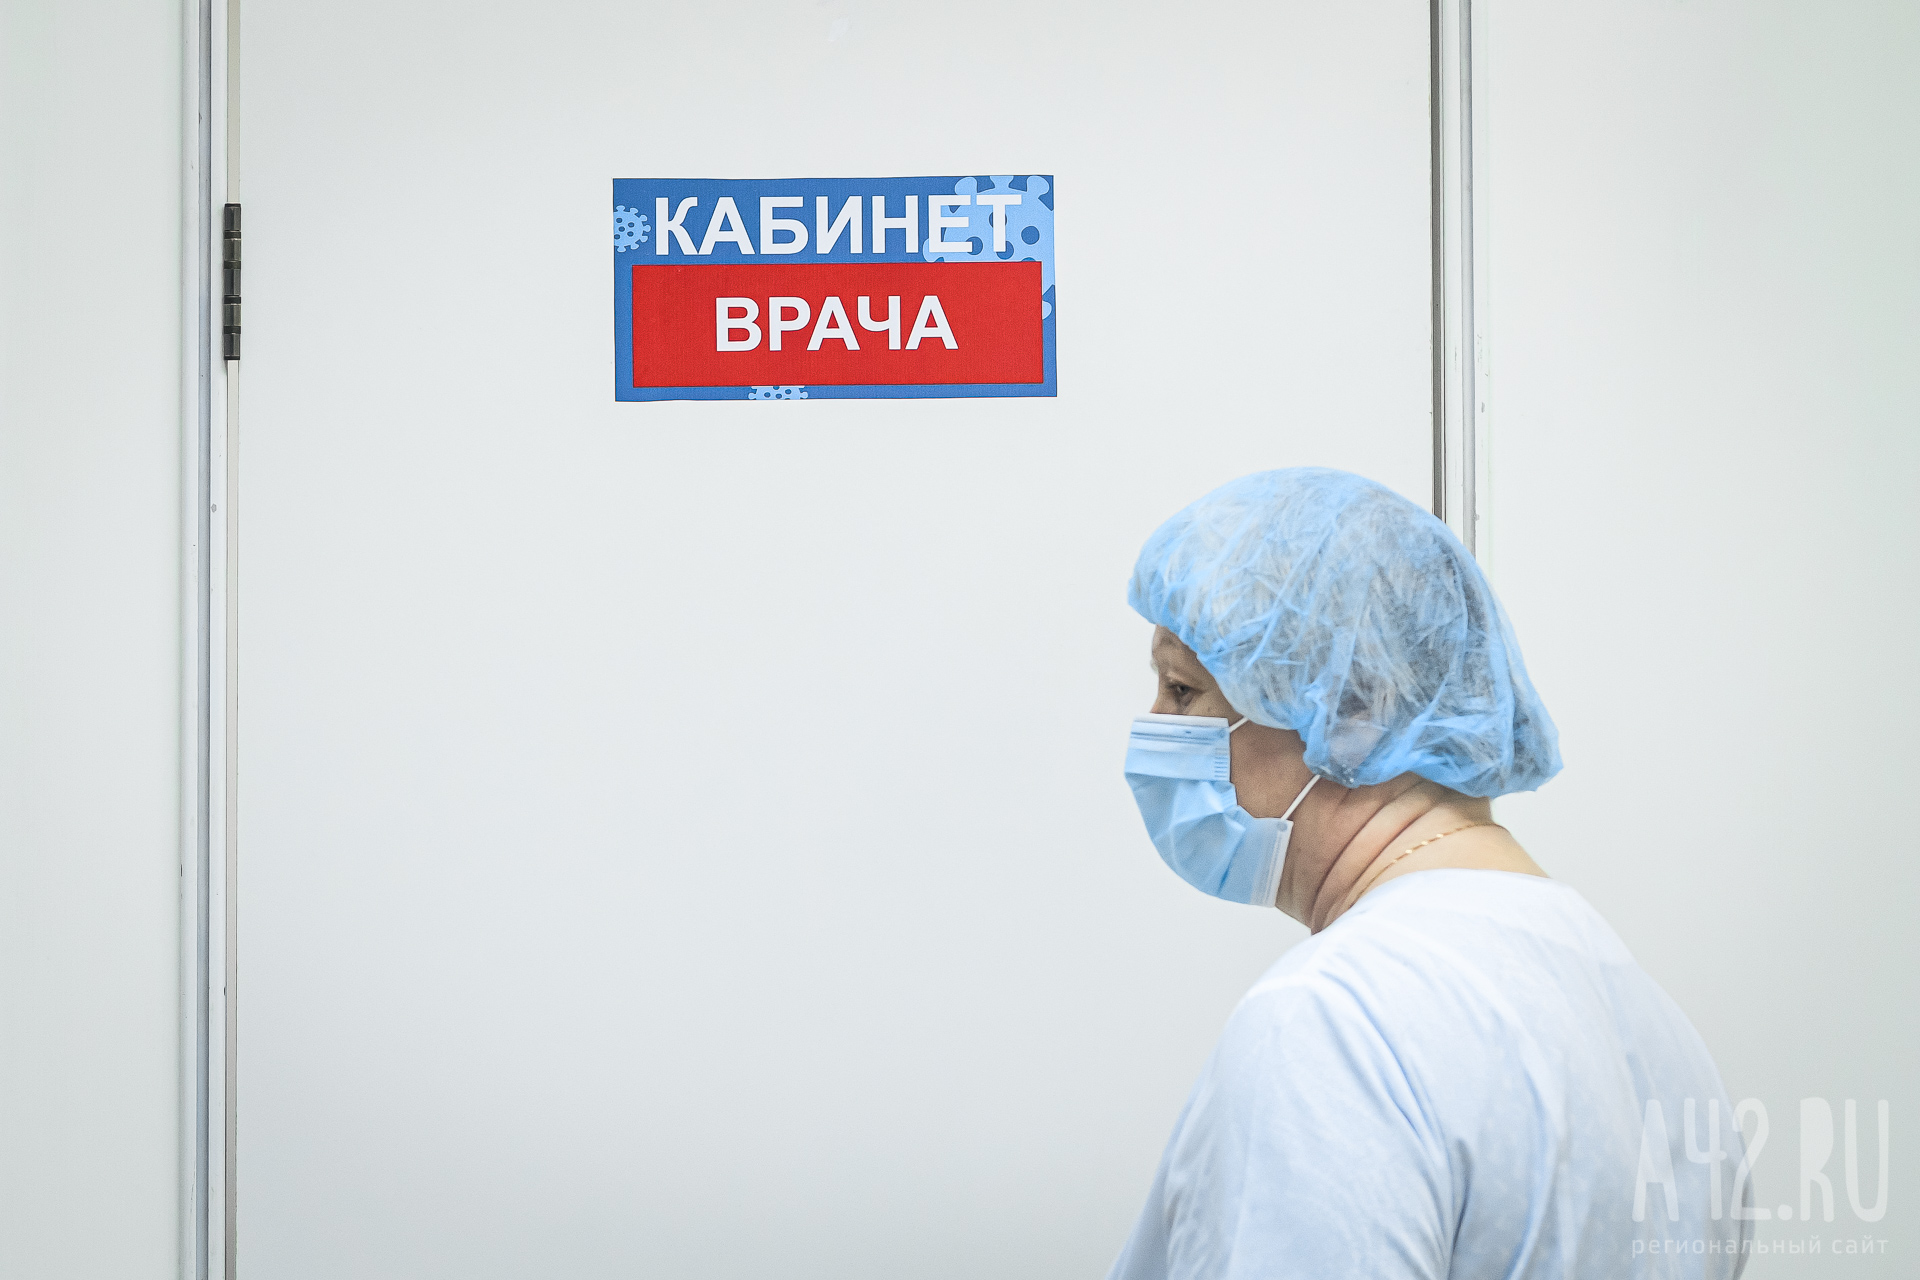 Университет в Новосибирске отправили на дистанционное обучение из-за кори